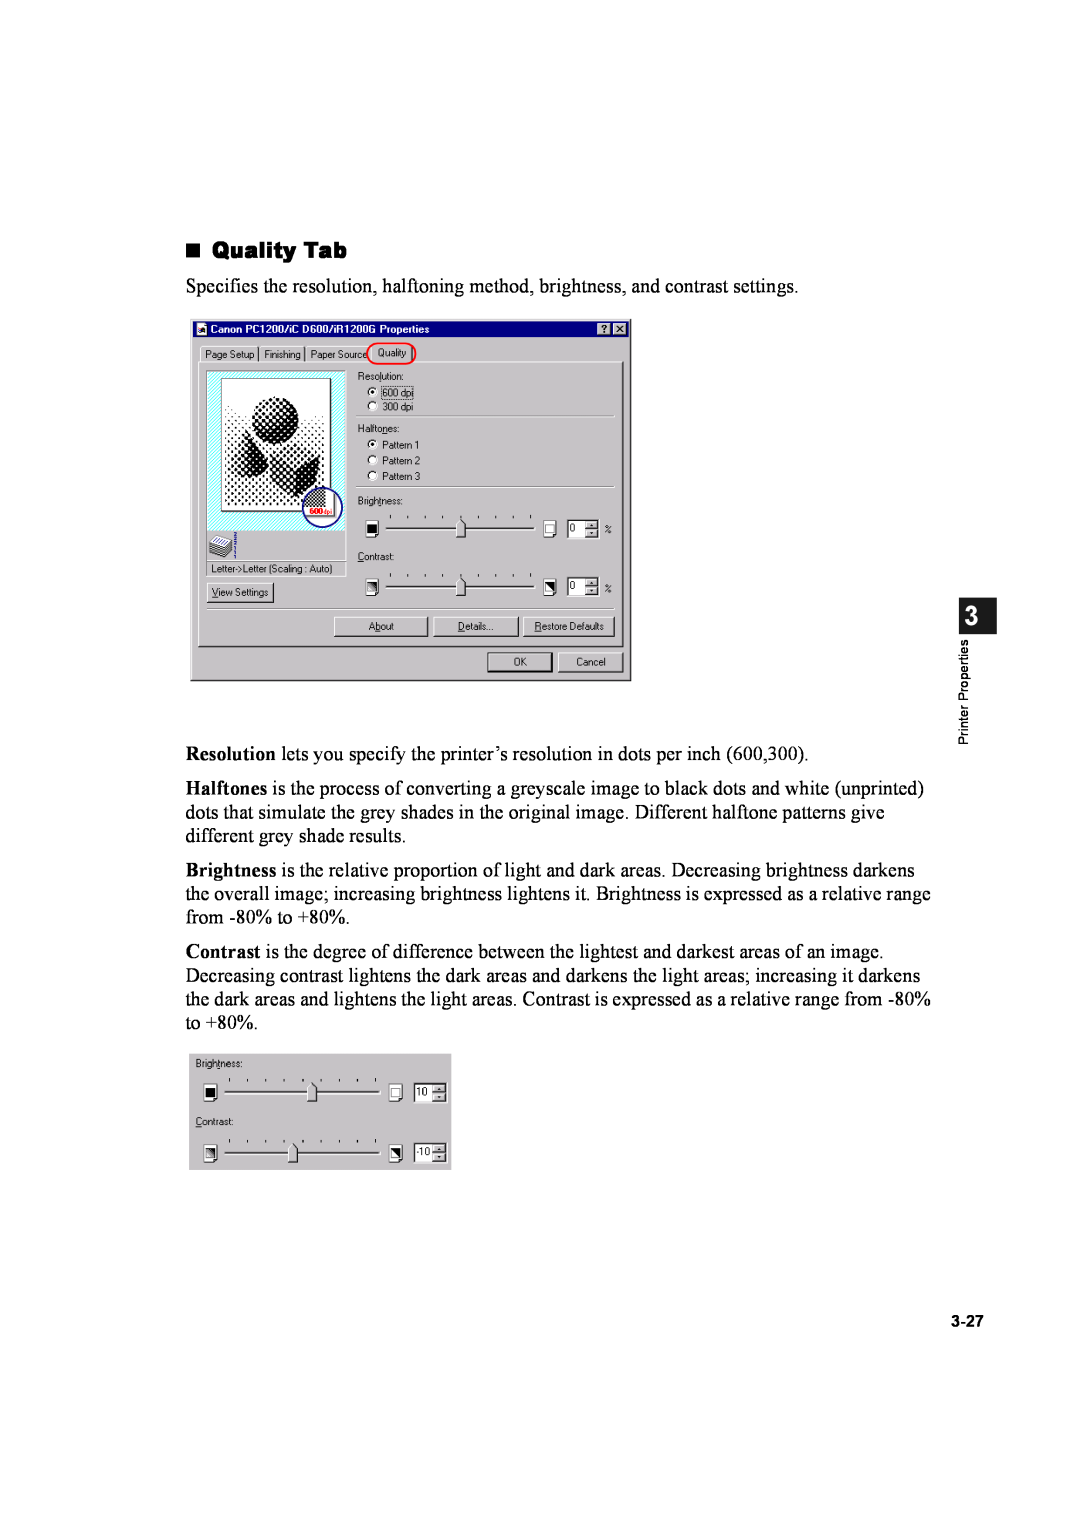 Canon D600 manual Quality Tab, Printer Properties 